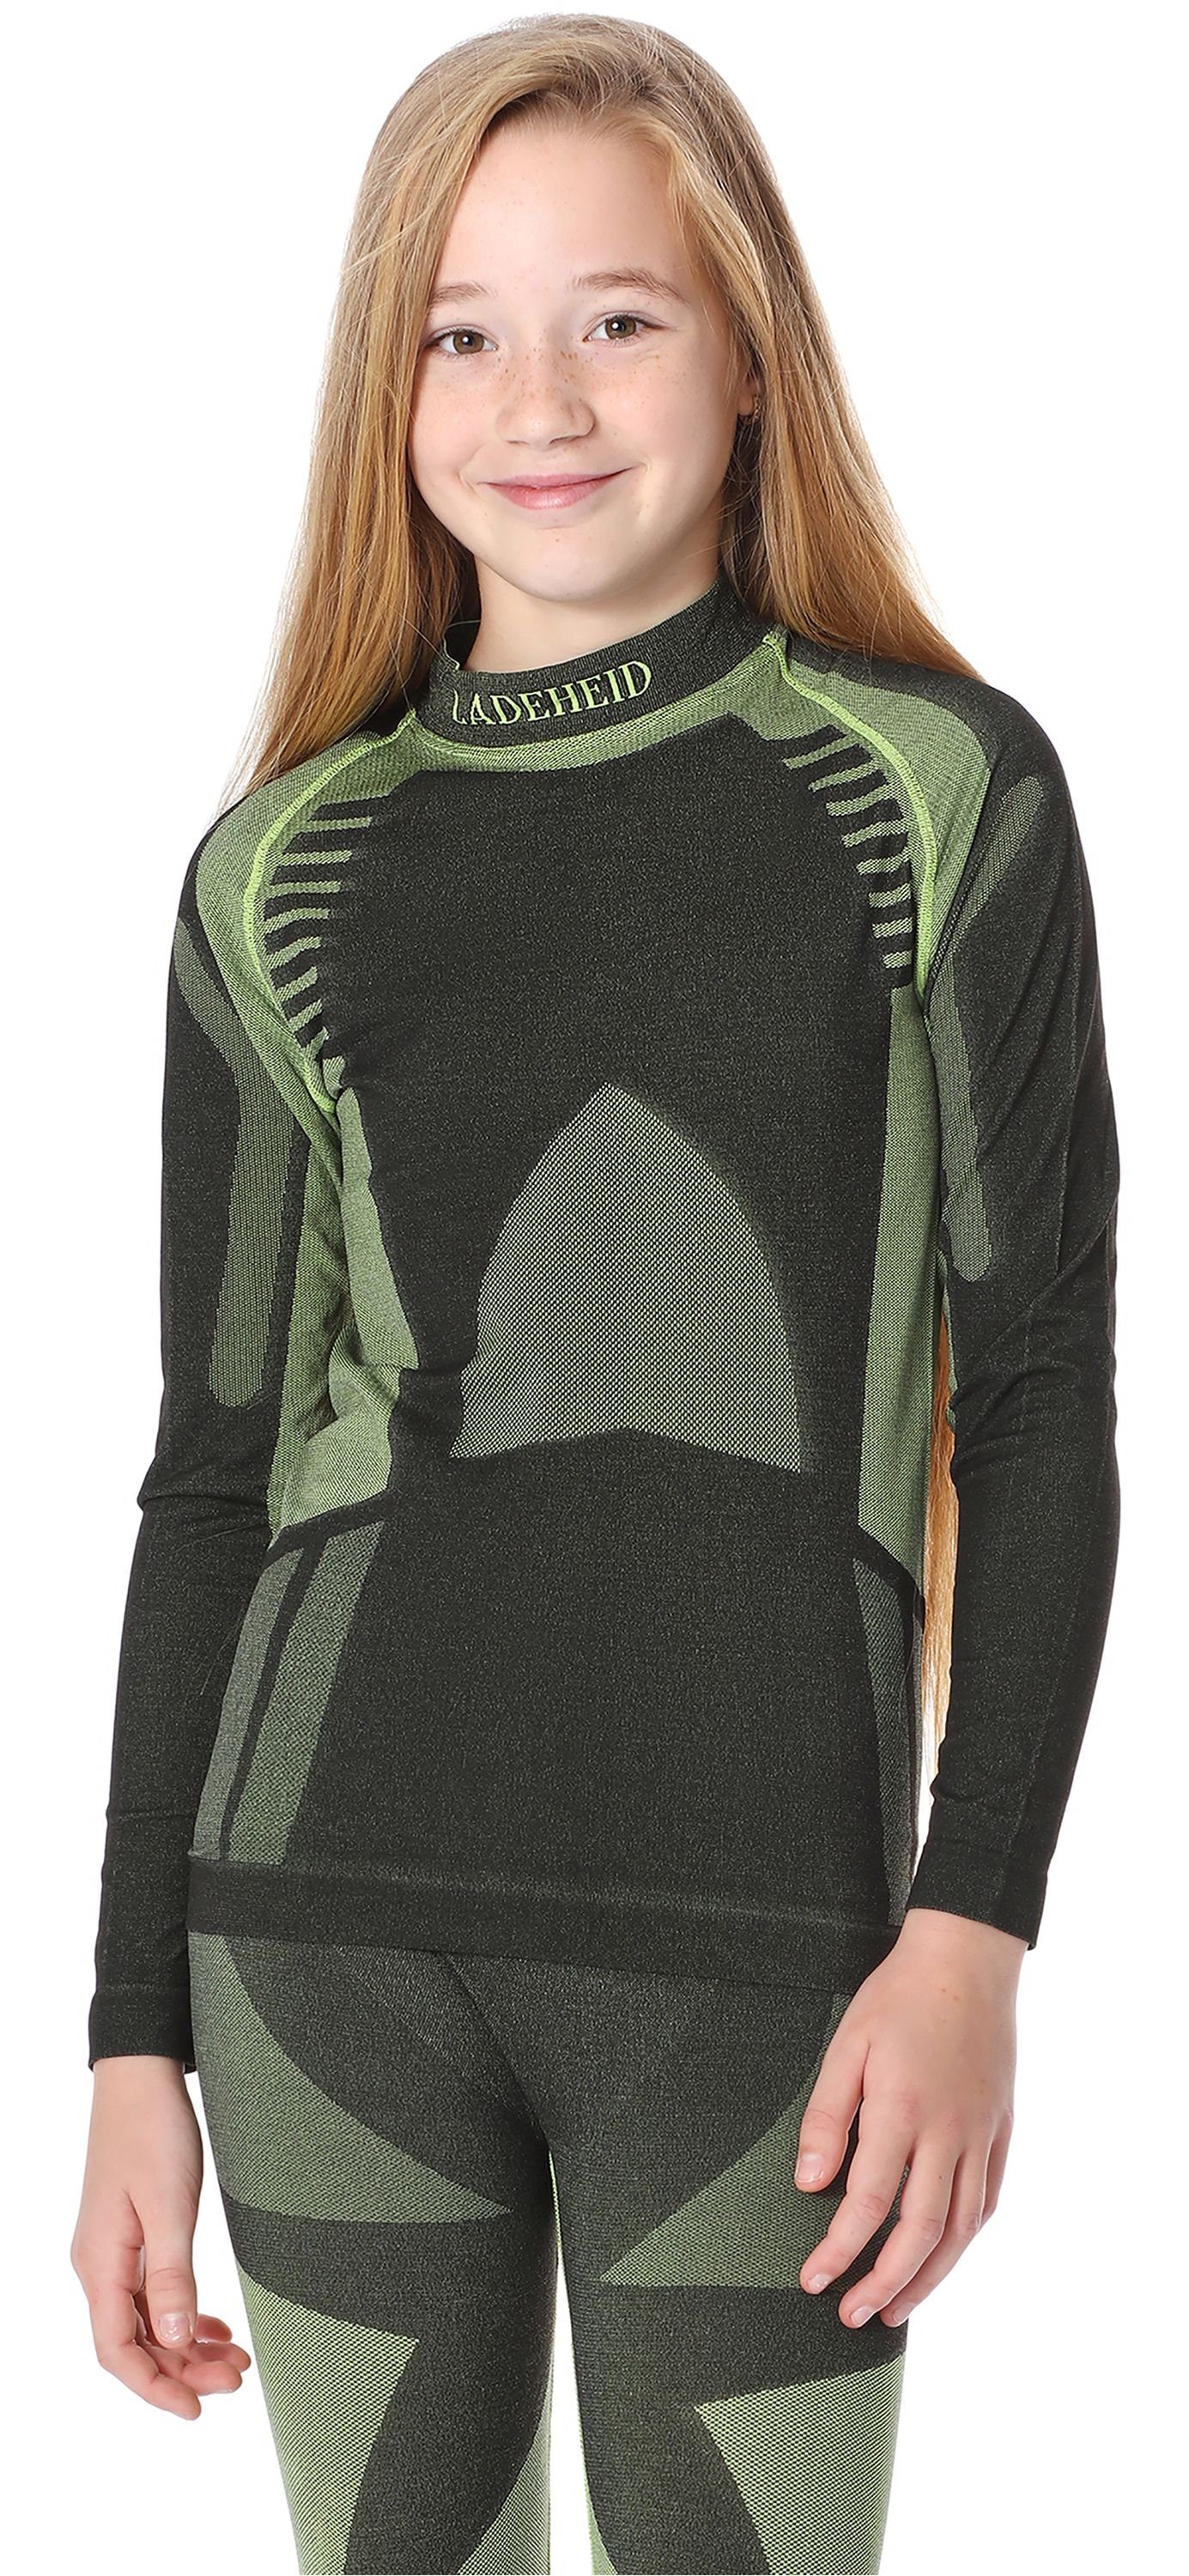 Ladeheid Funktionsunterhemd Damen Funktionsunterwäsche Shirt langarm Schwarz/Grün Thermoaktiv